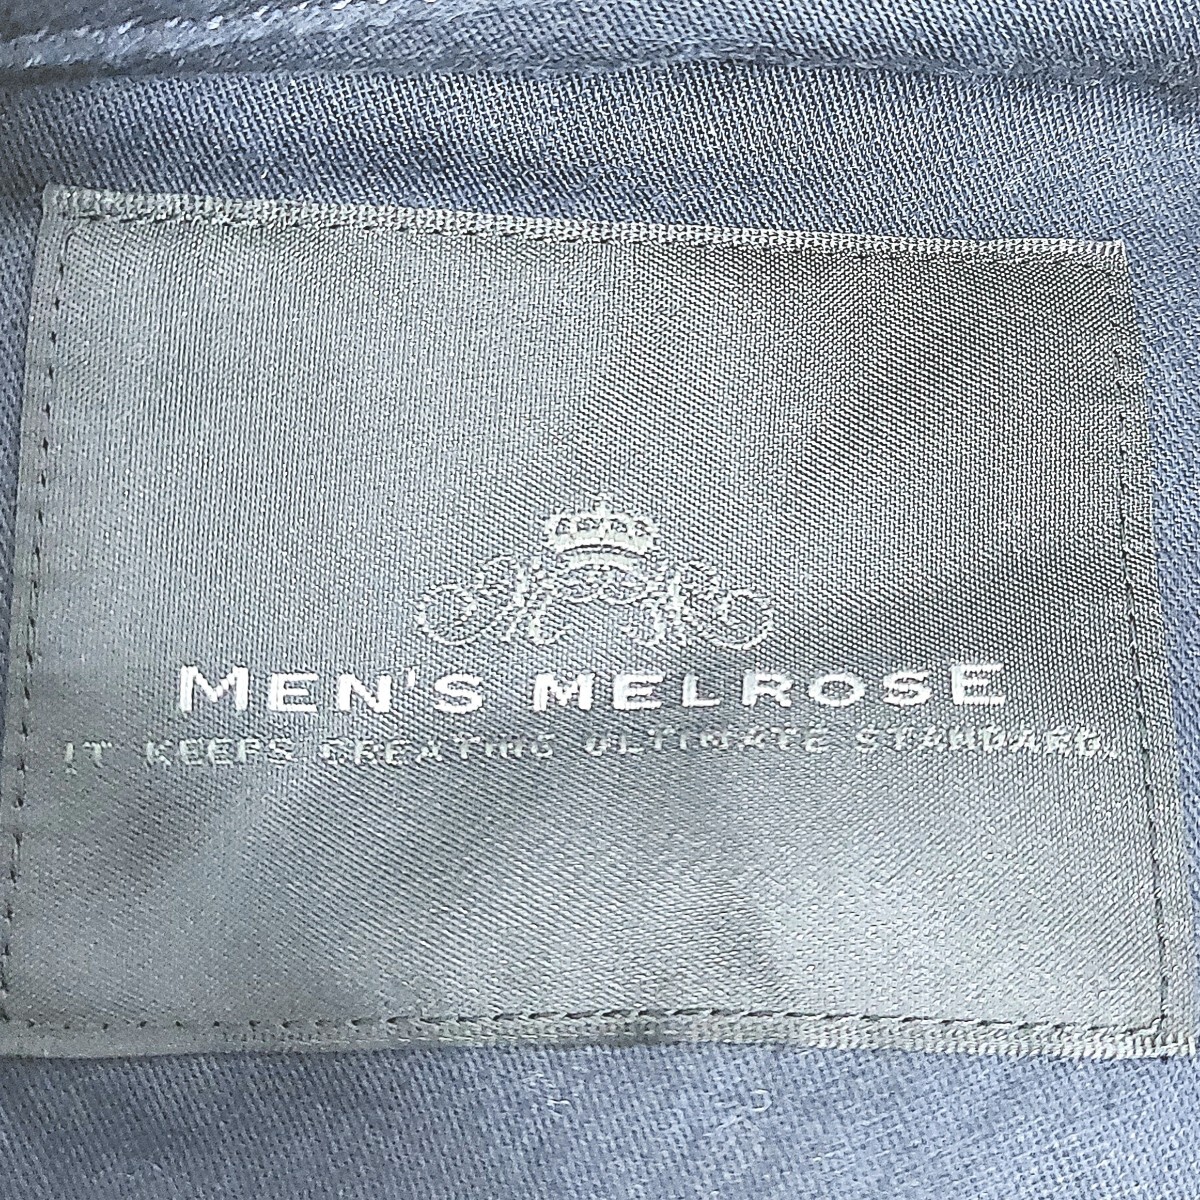 【MEN'S MELROSE】メンズメルローズ ジャケット ネイビー系 紺 コットン 綿 麻 定番 重ね着 春服 紳士 こなれ感 メンズ サイズ4 /Y6168LL_画像6